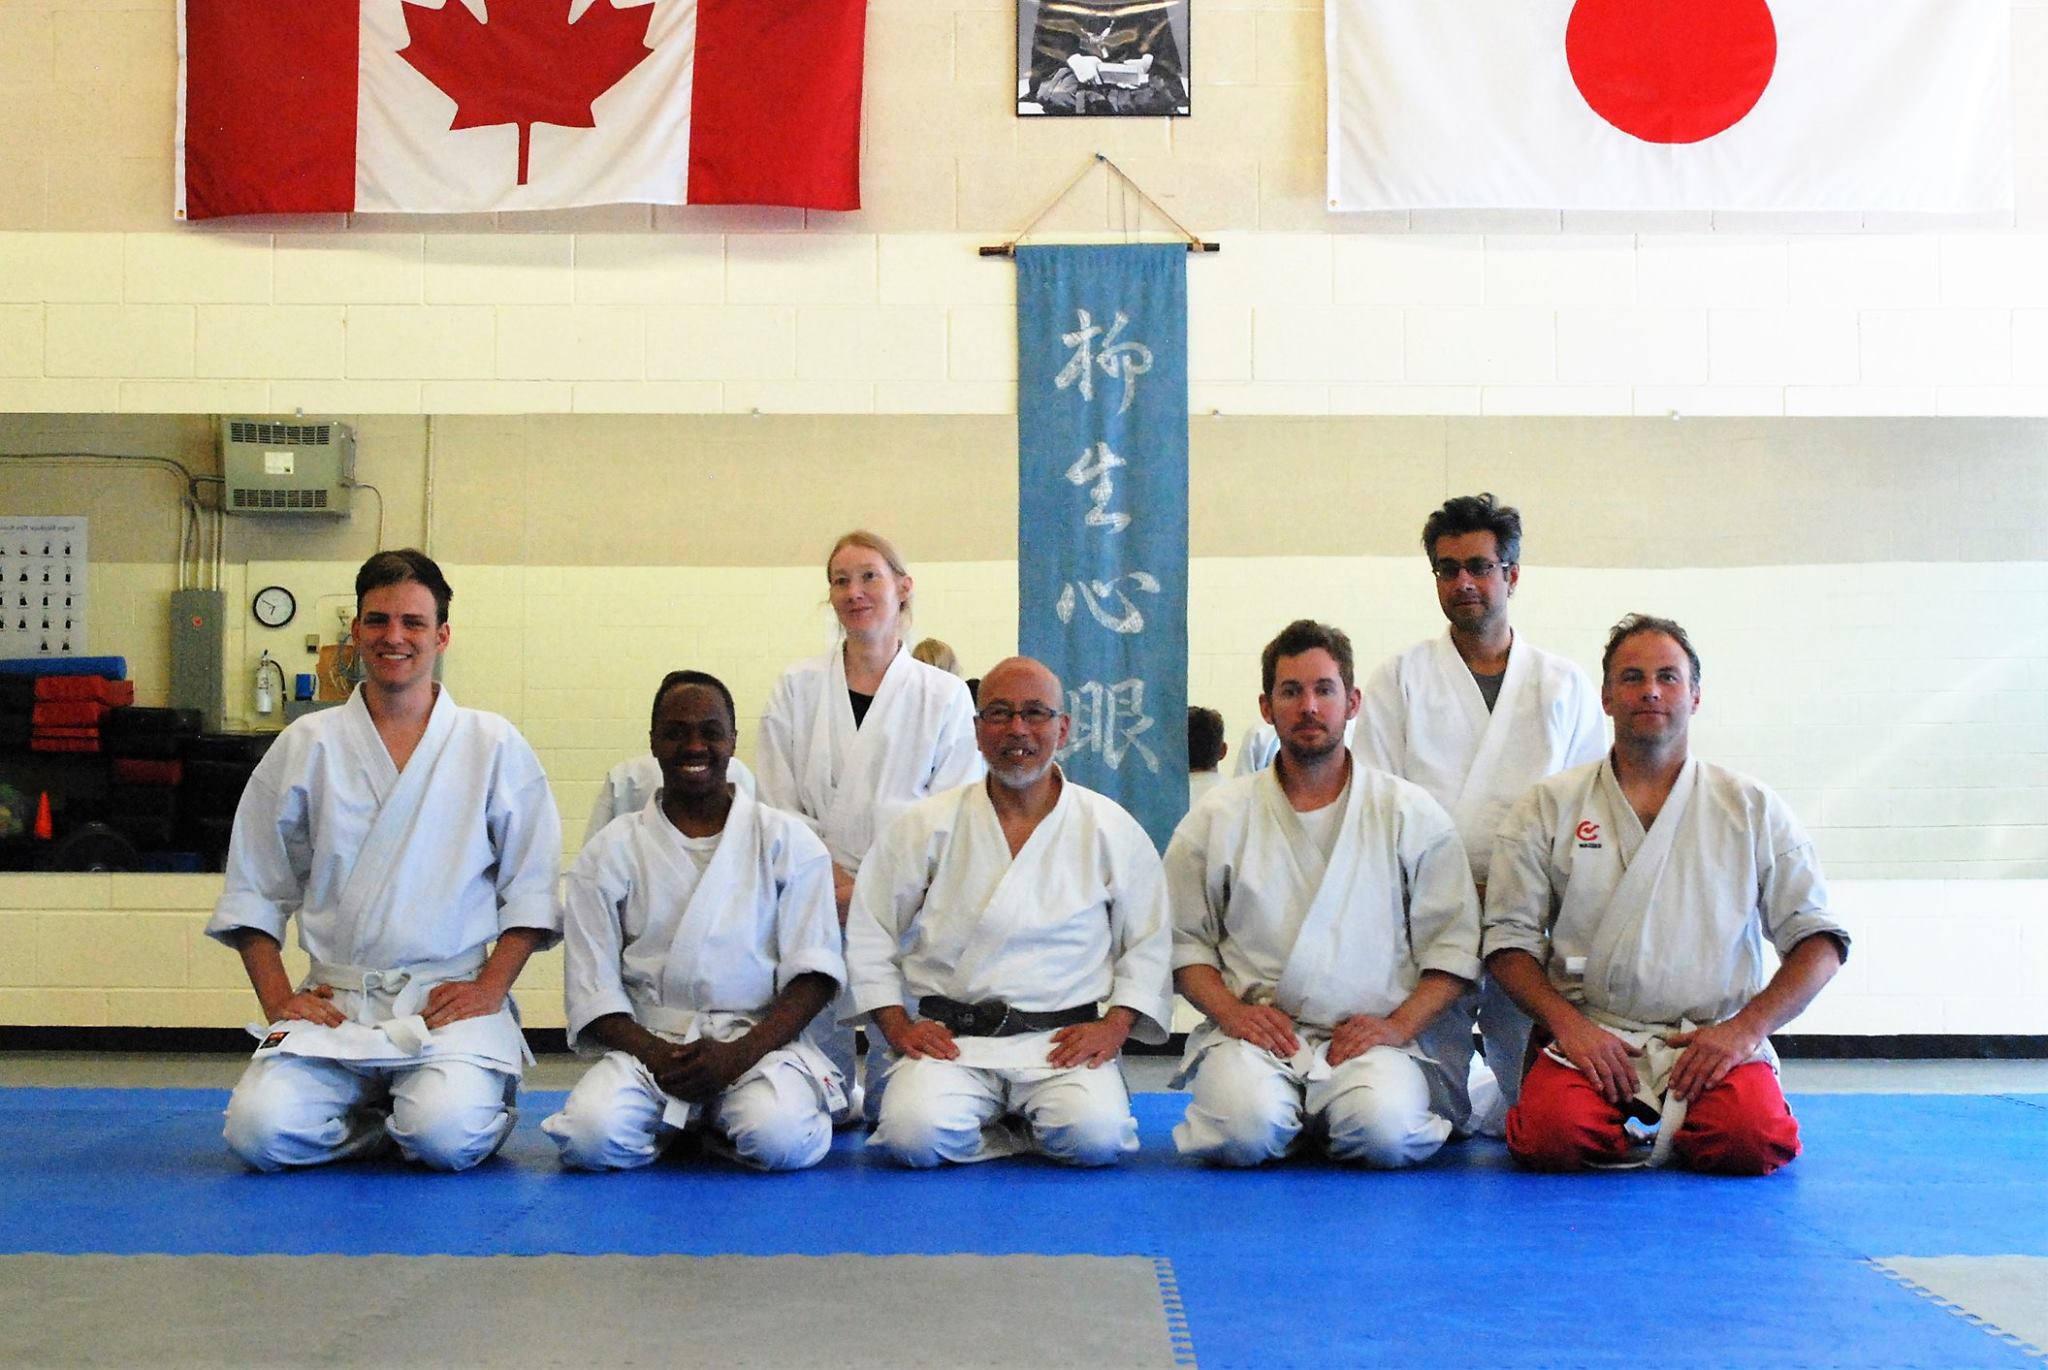 The Canadian Yagyu Shingan Ryu 2016 Seminar Group